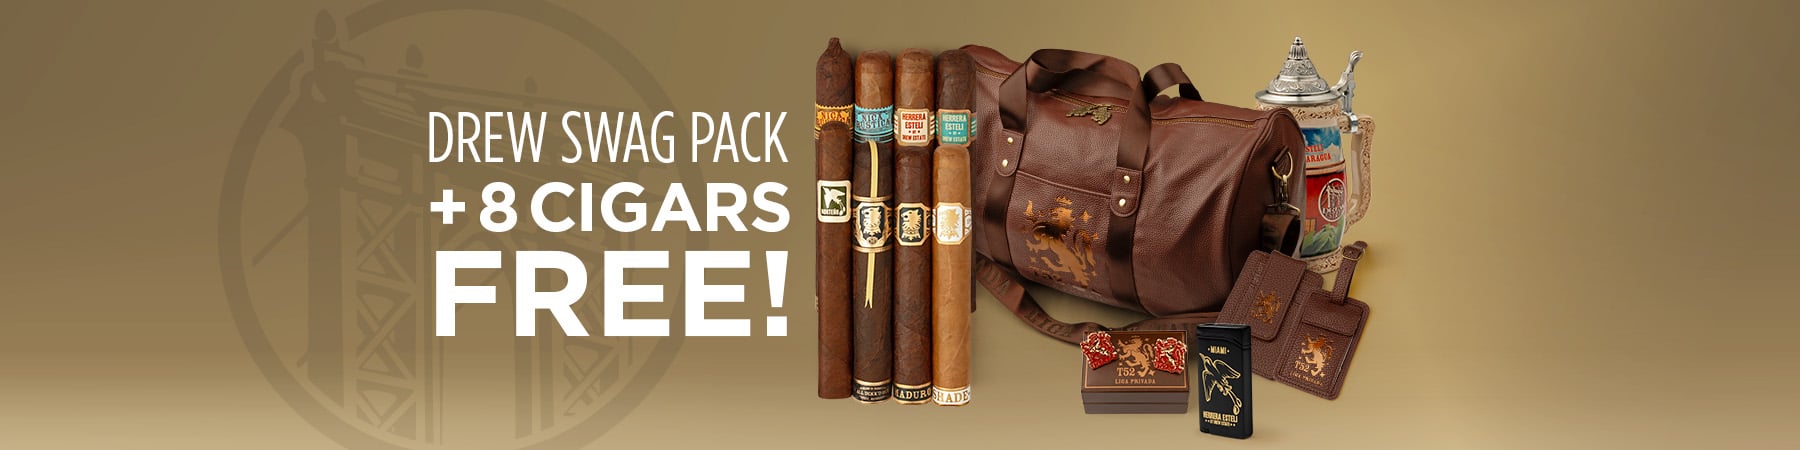 Drew Swag Pack + 8 Cigars Free!